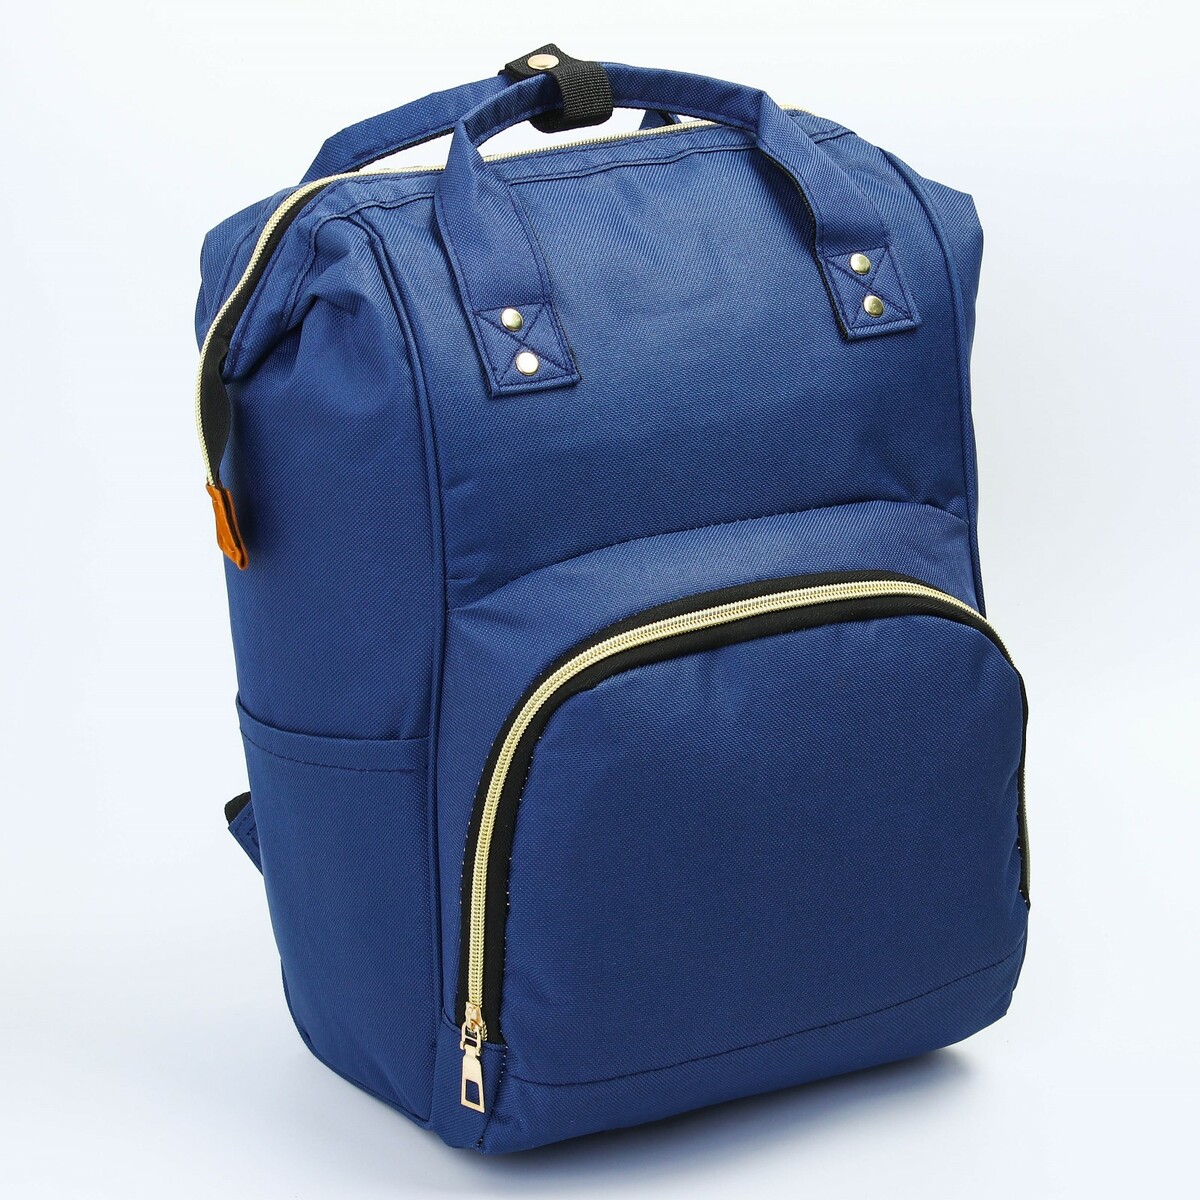 Рюкзак женский с термокарманом, термосумка - портфель, цвет синий рюкзак женский с термокарманом термосумка портфель бирюзовый